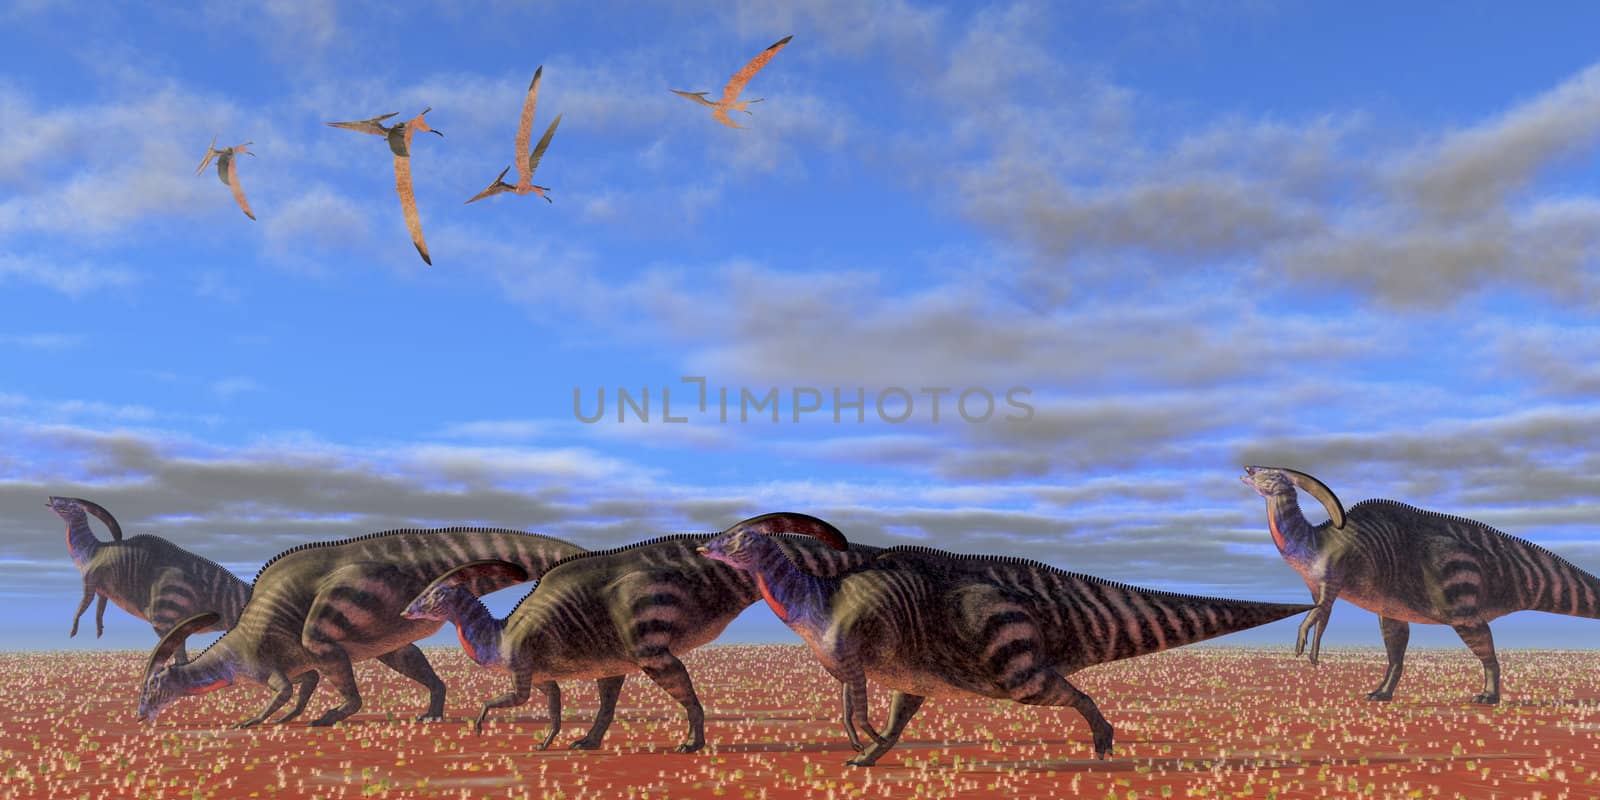 A herd of Parasaurolophus dinosaurs migrate through a desert searching for better vegetation.